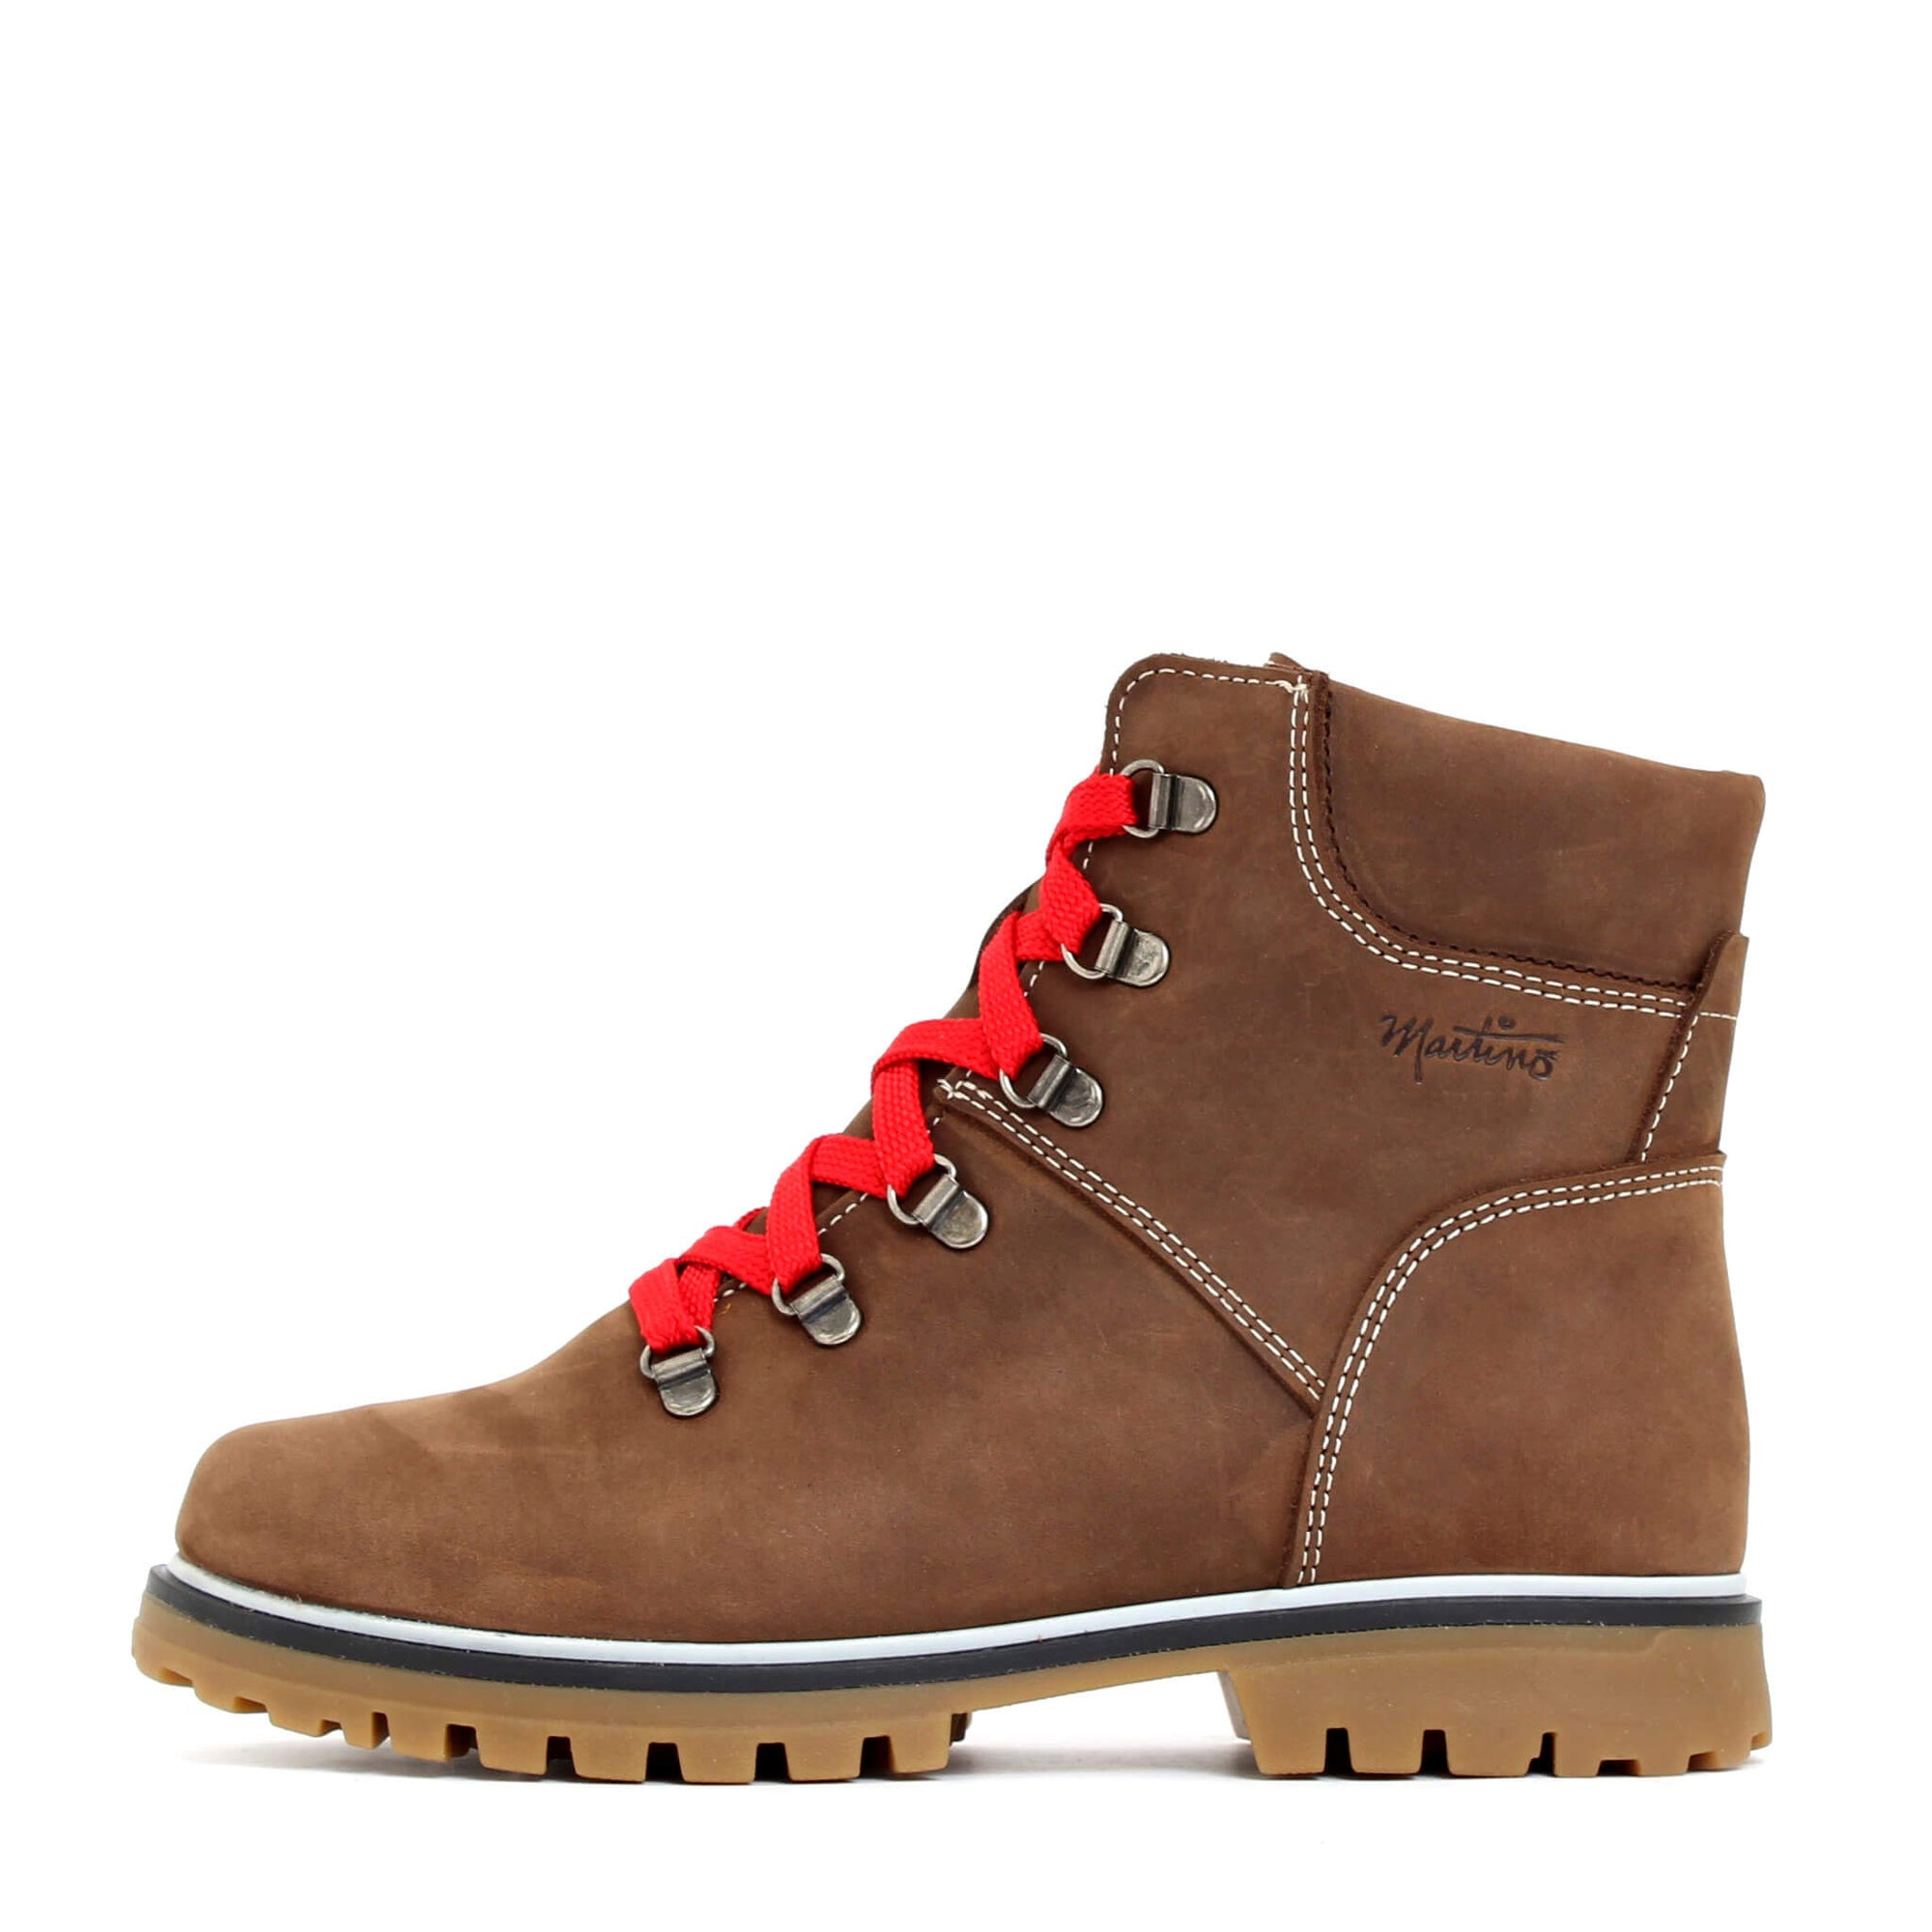 Maika winter boot for women - Brown 